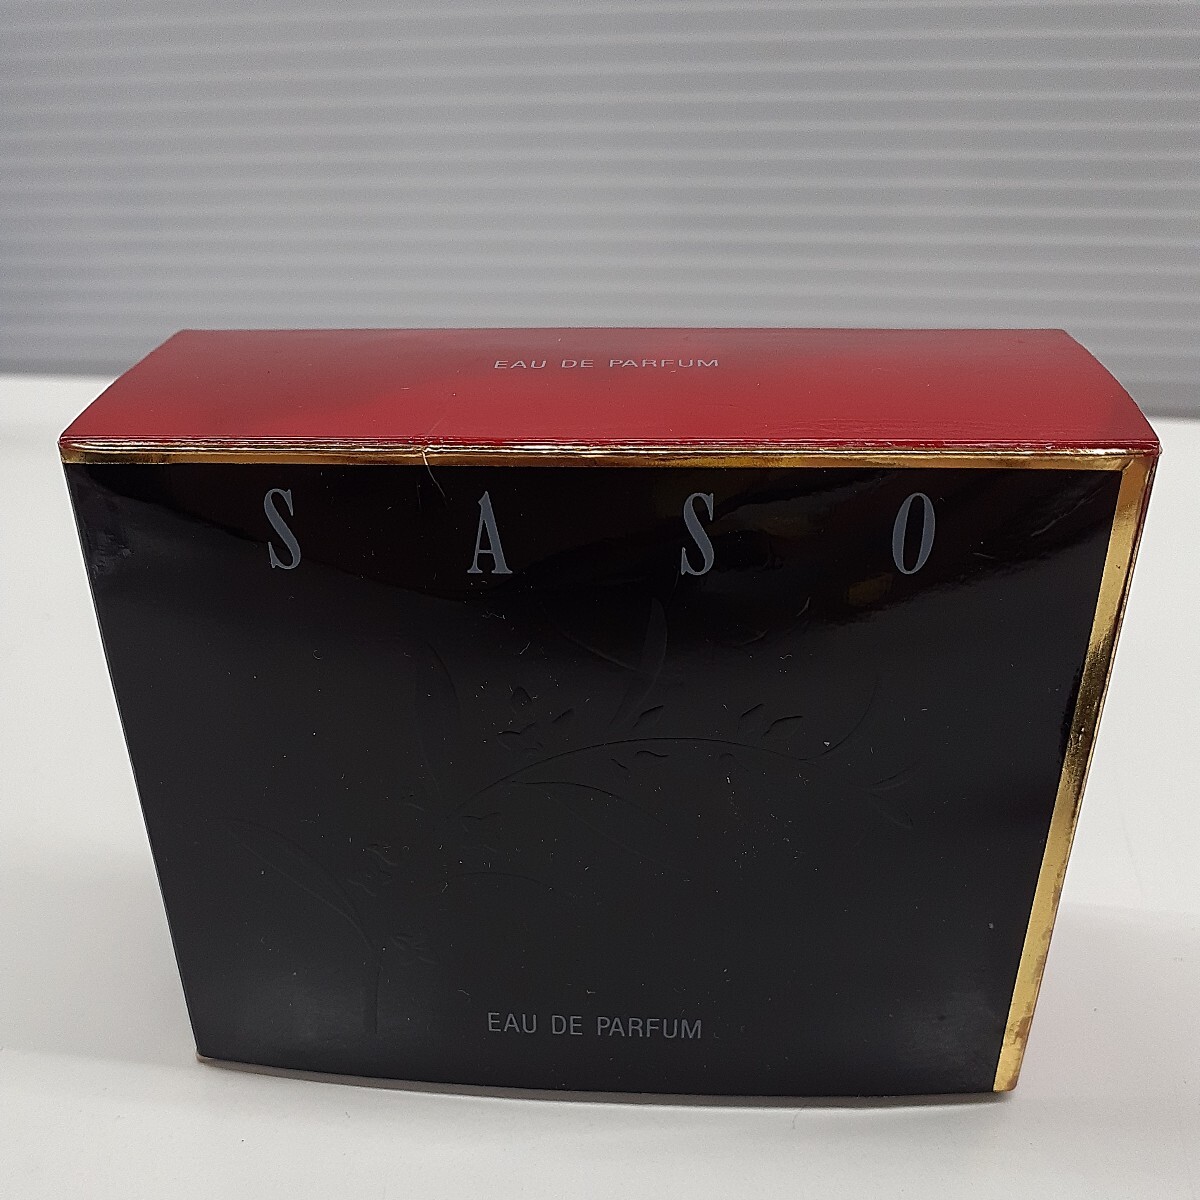  Shiseido SASO. чайница o-do Pal fam духи 50ml с футляром .